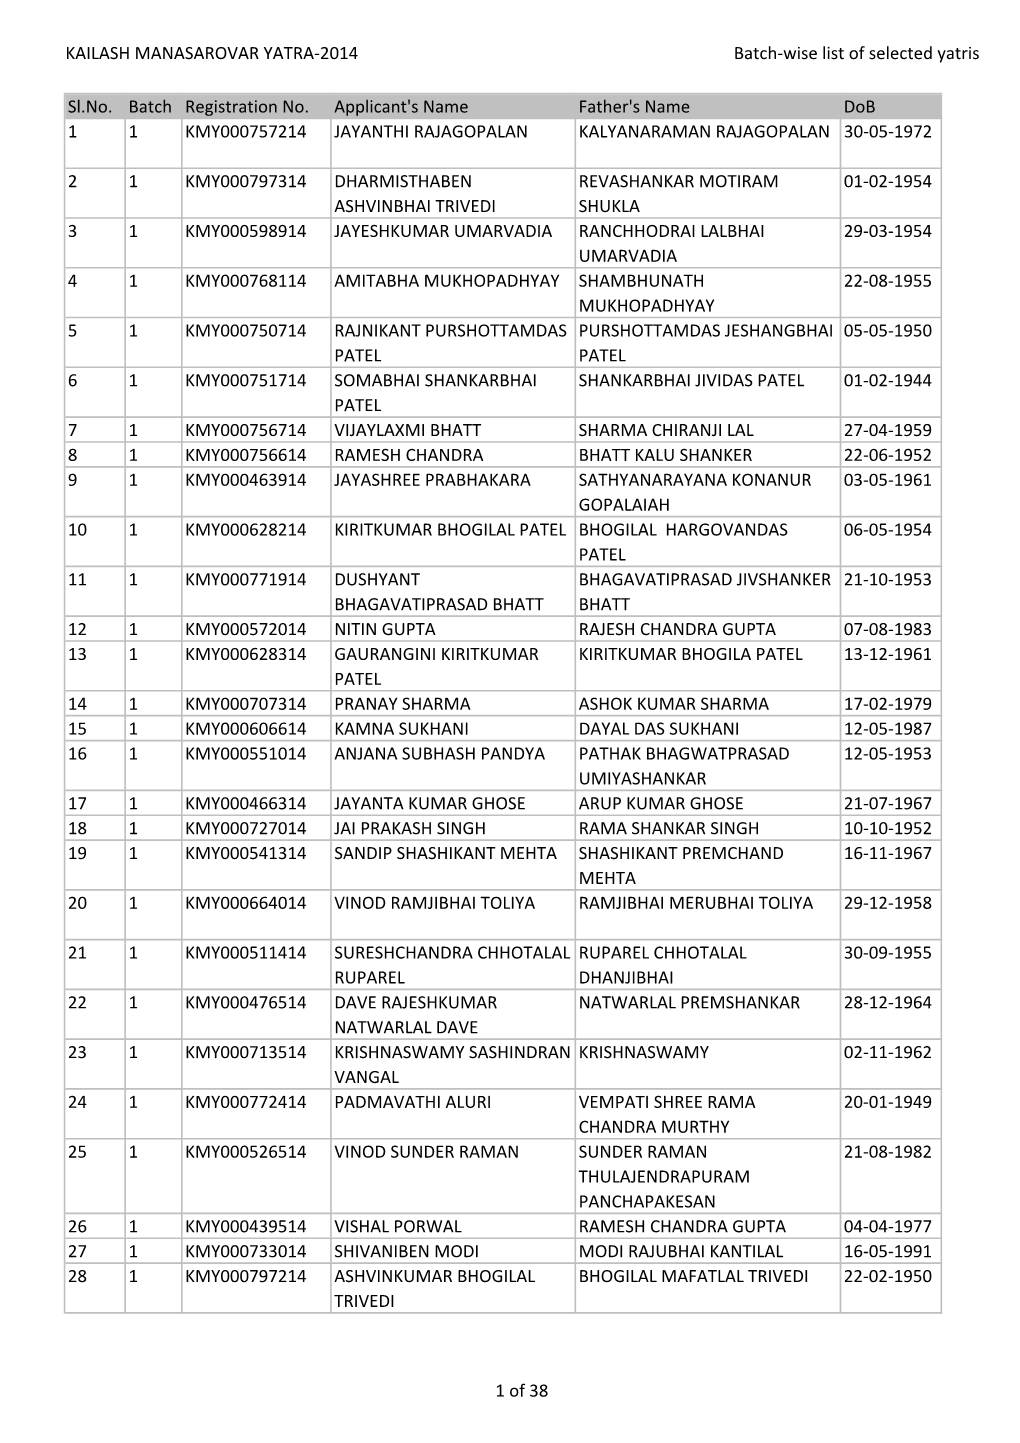 KAILASH MANASAROVAR YATRA-2014 Batch-Wise List of Selected Yatris